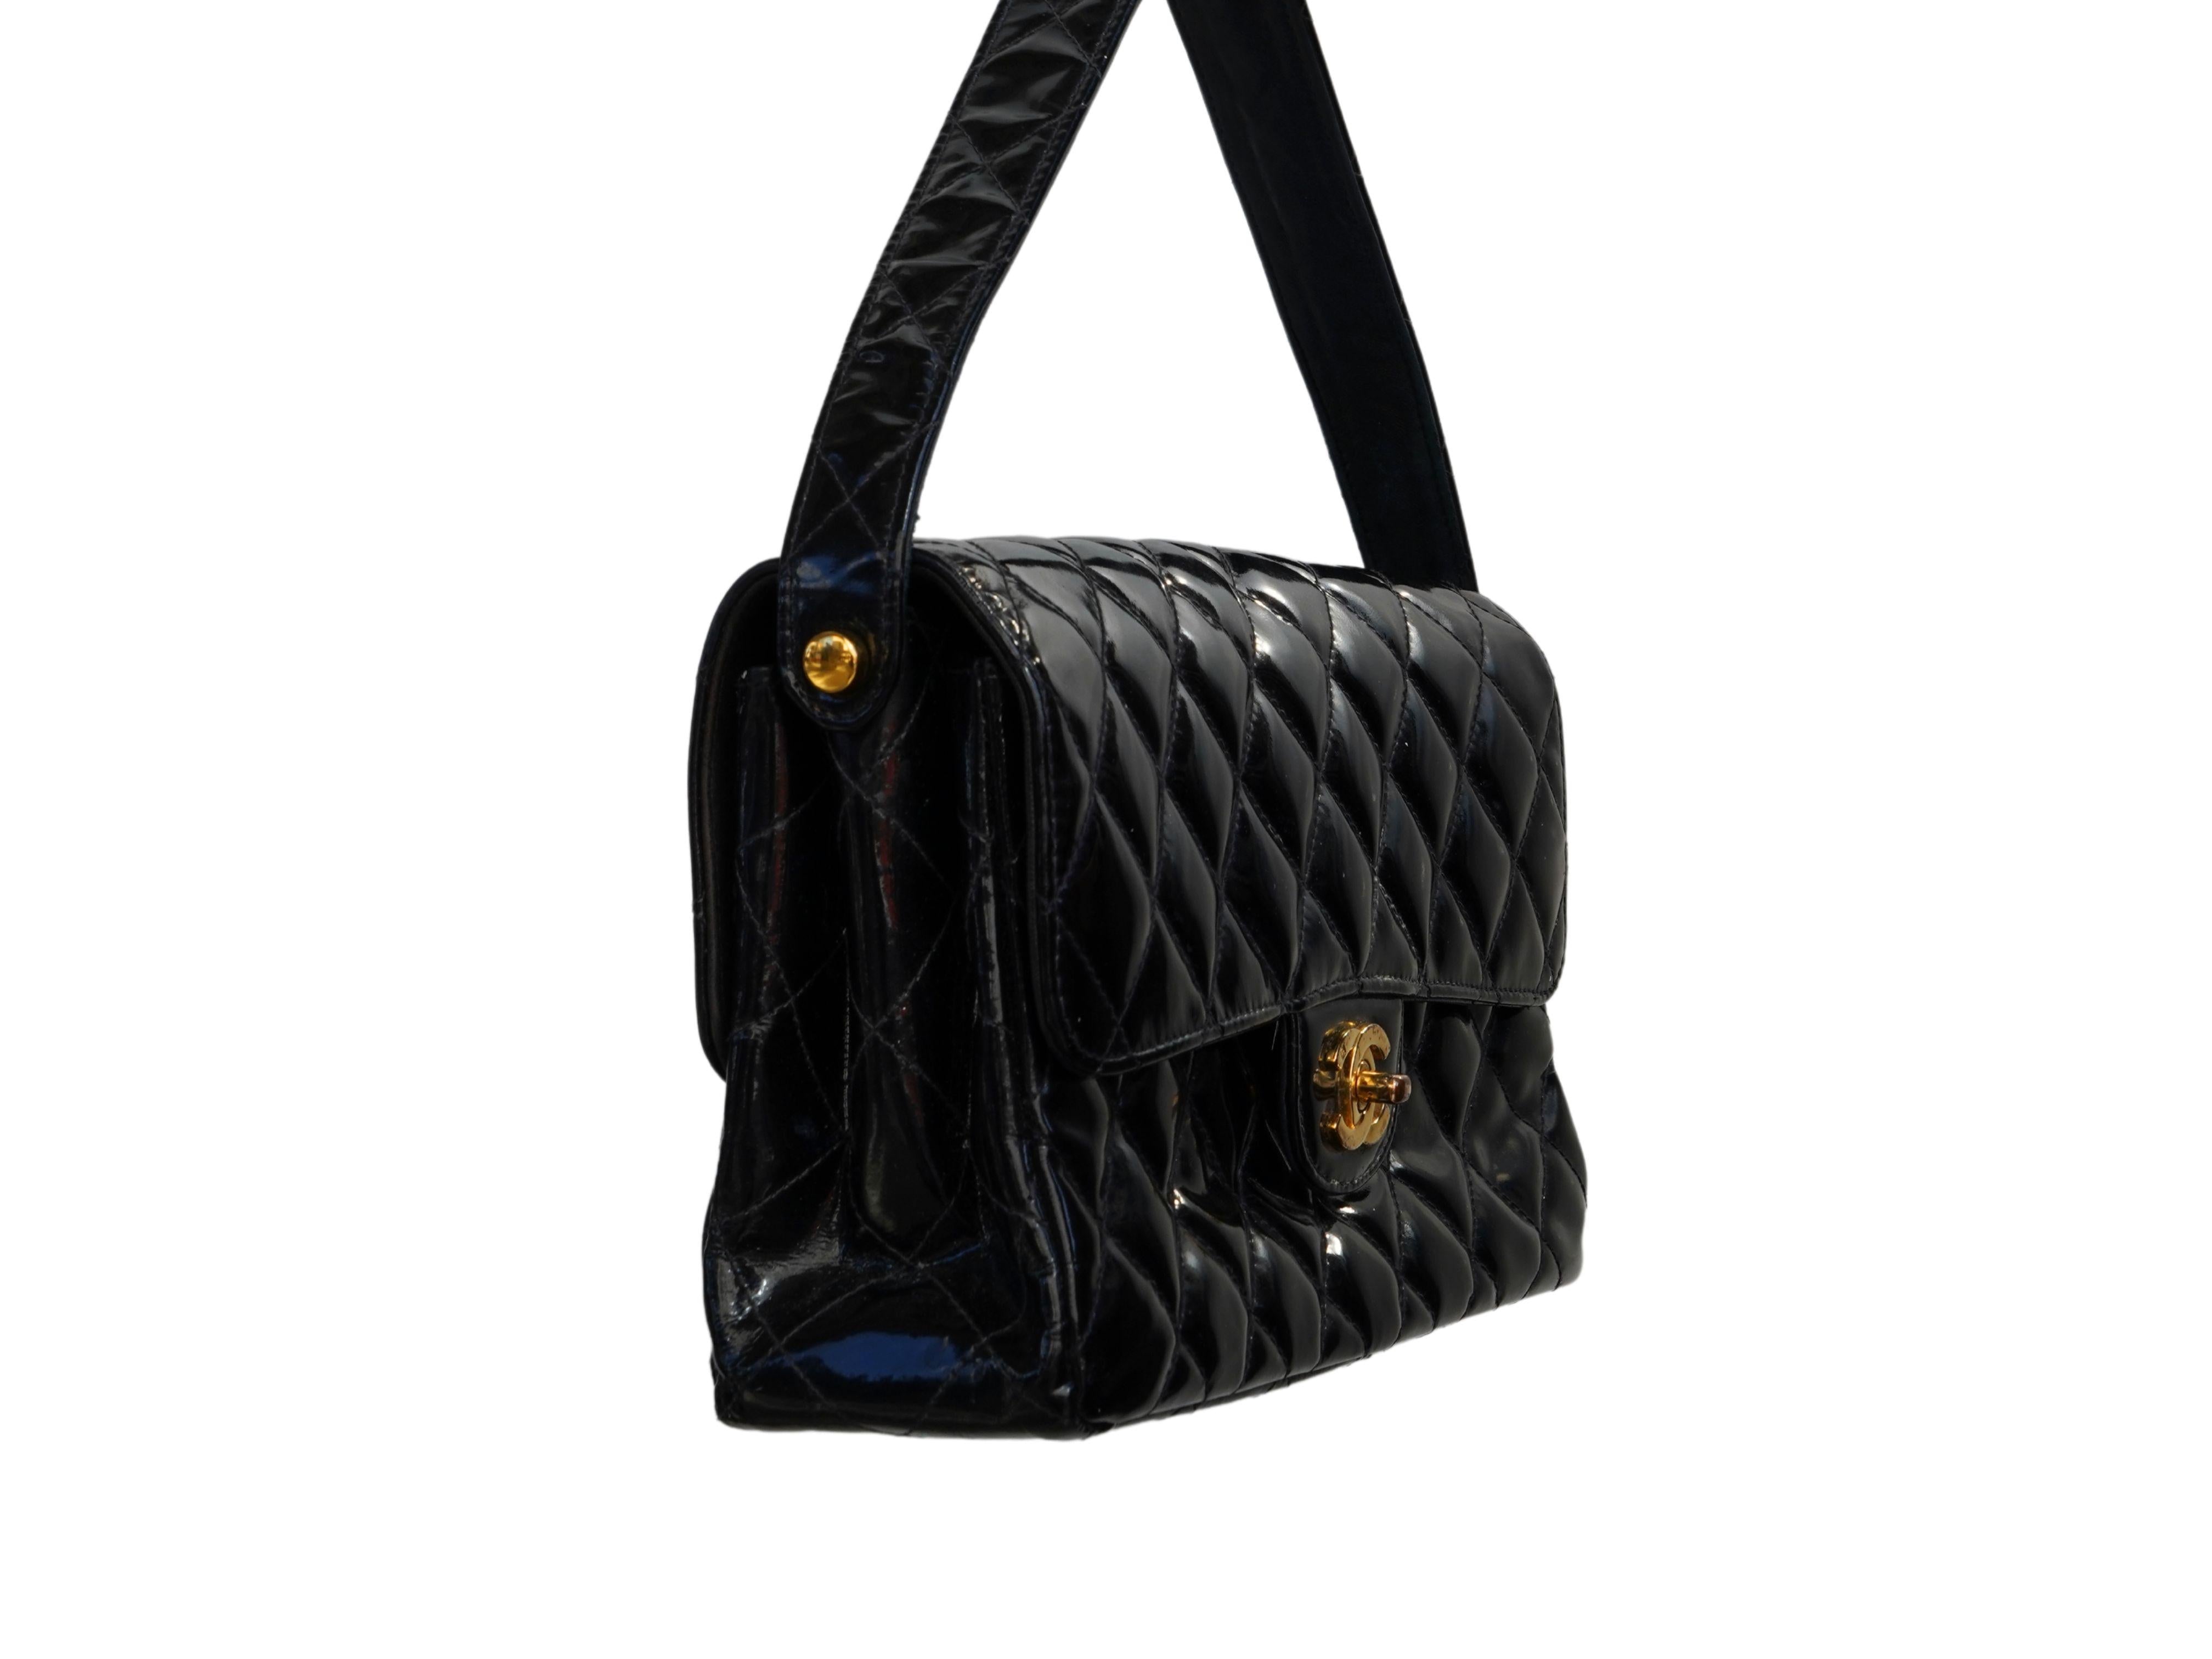 Chanel 1996 Black Patent Quilted Medium Double Charm CC 24K Flap Handbag Purse